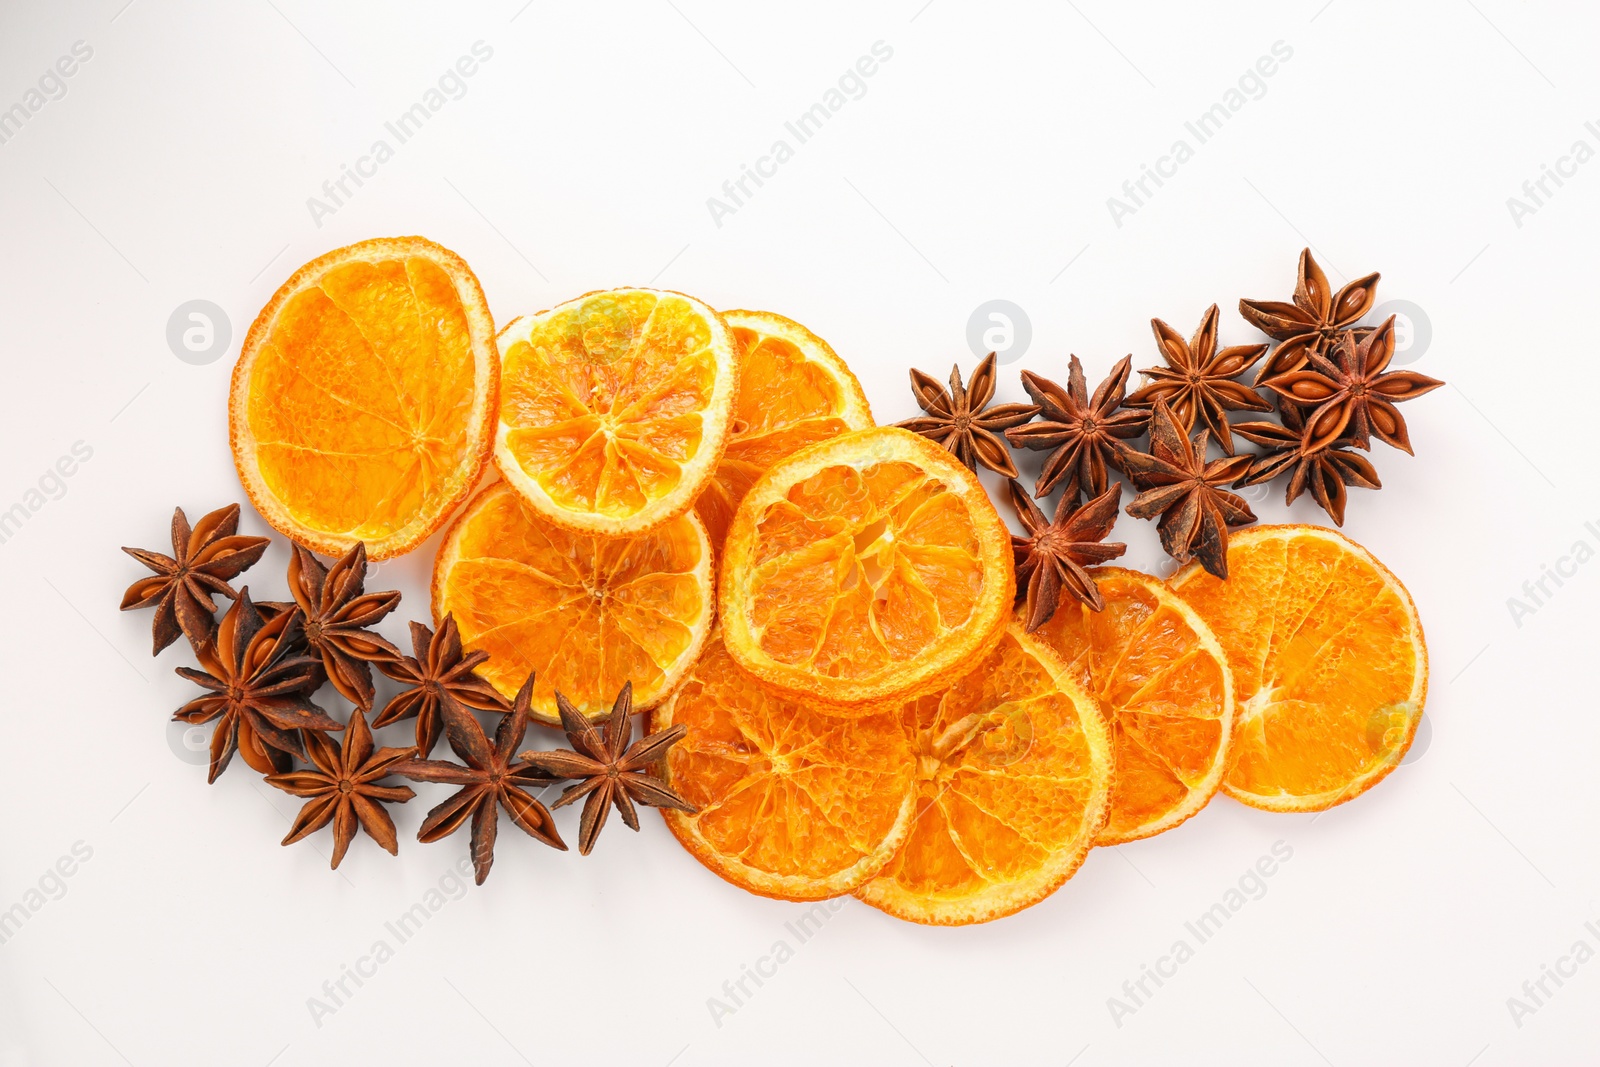 Photo of Dry orange slices and anise stars on white background, flat lay